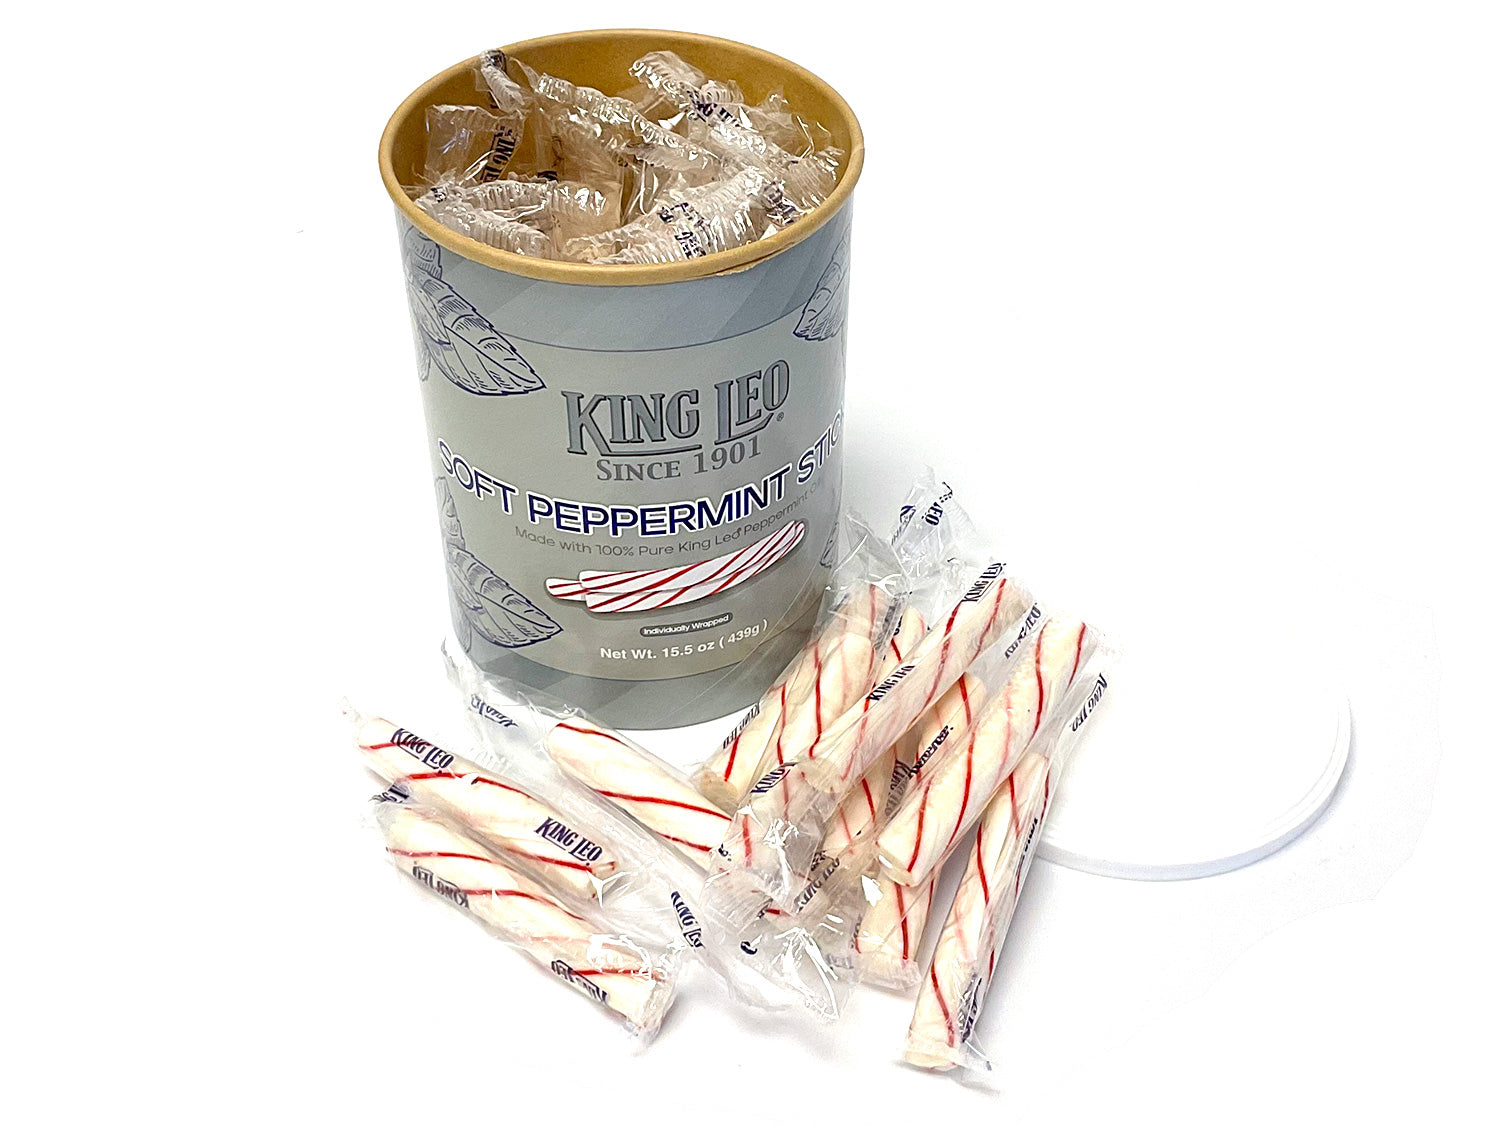 King Leo Soft Peppermint Sticks - 15.5 oz canister